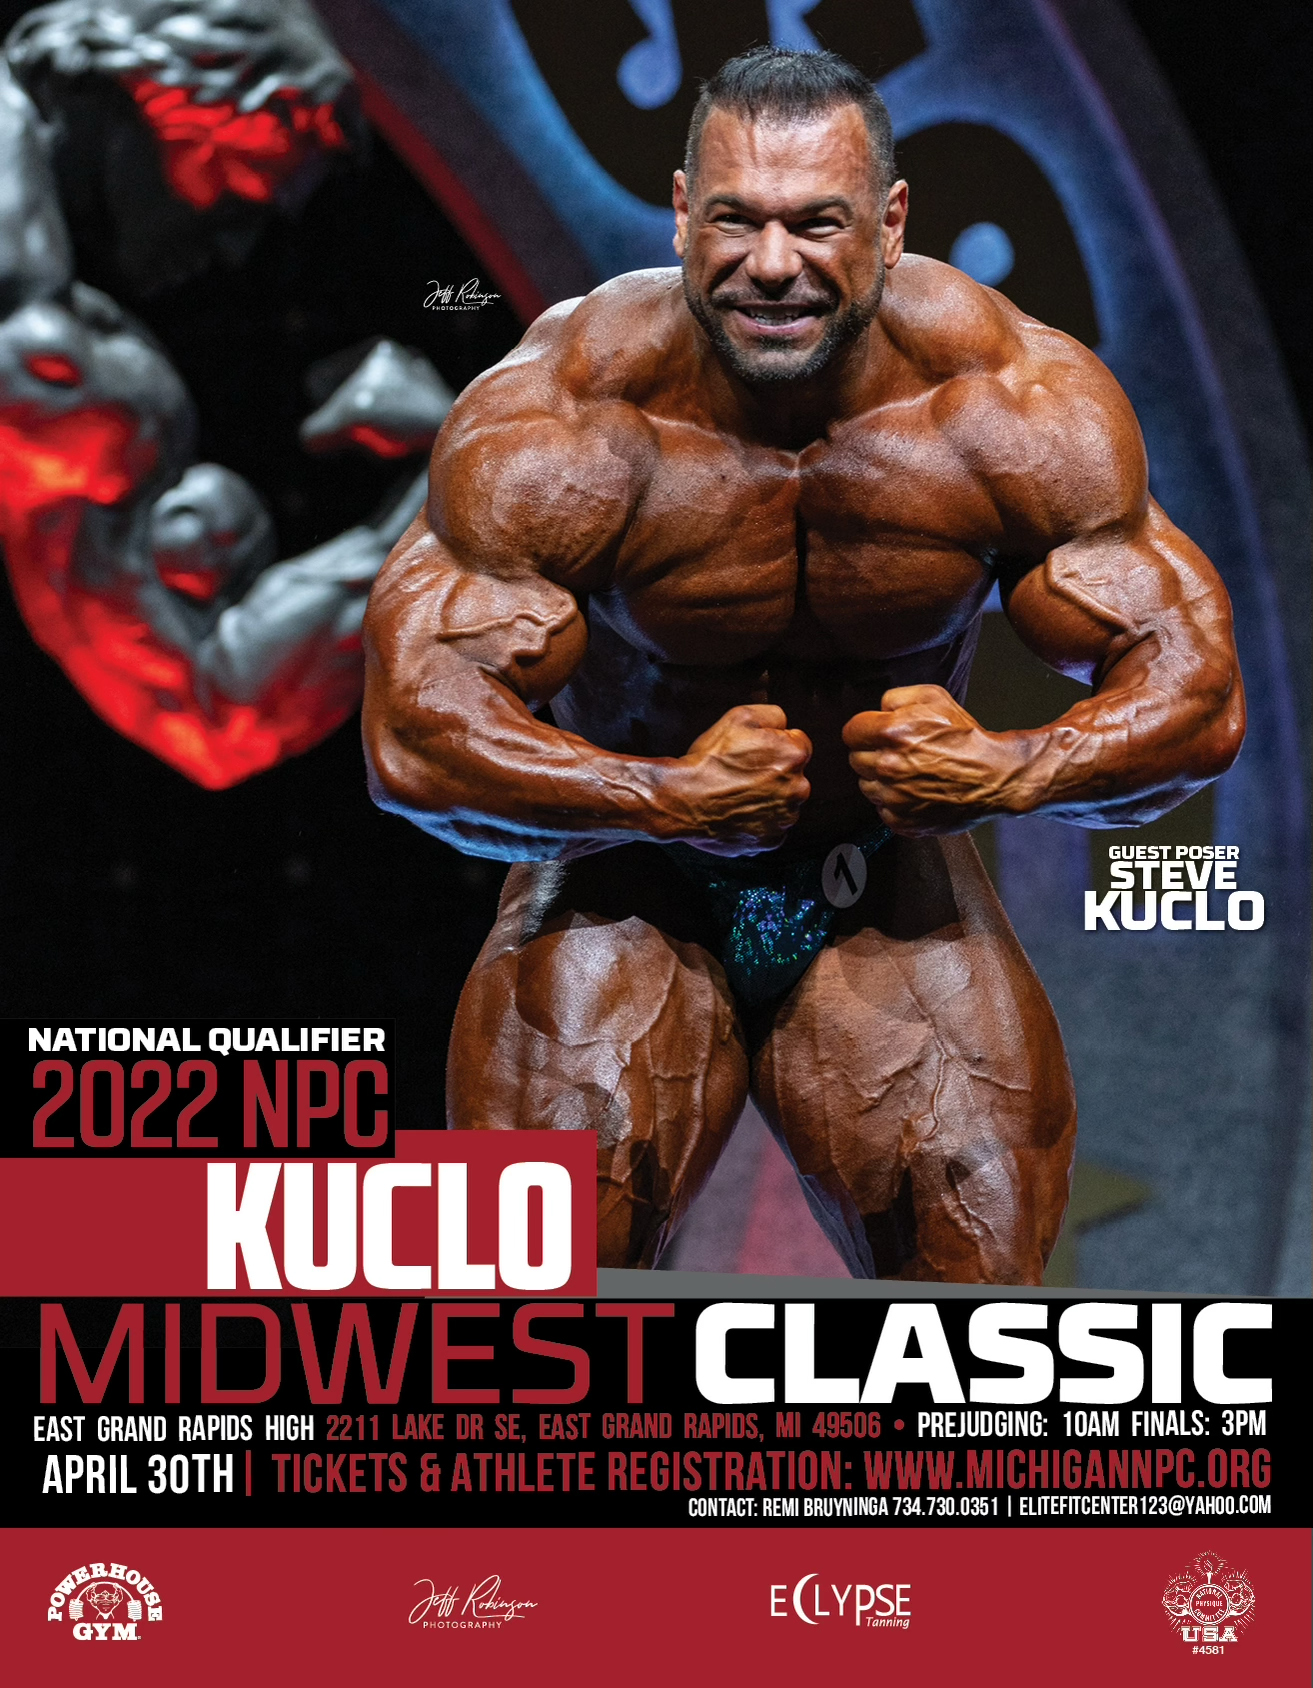 2022 NPC Kuclo Midwest Classic Poster